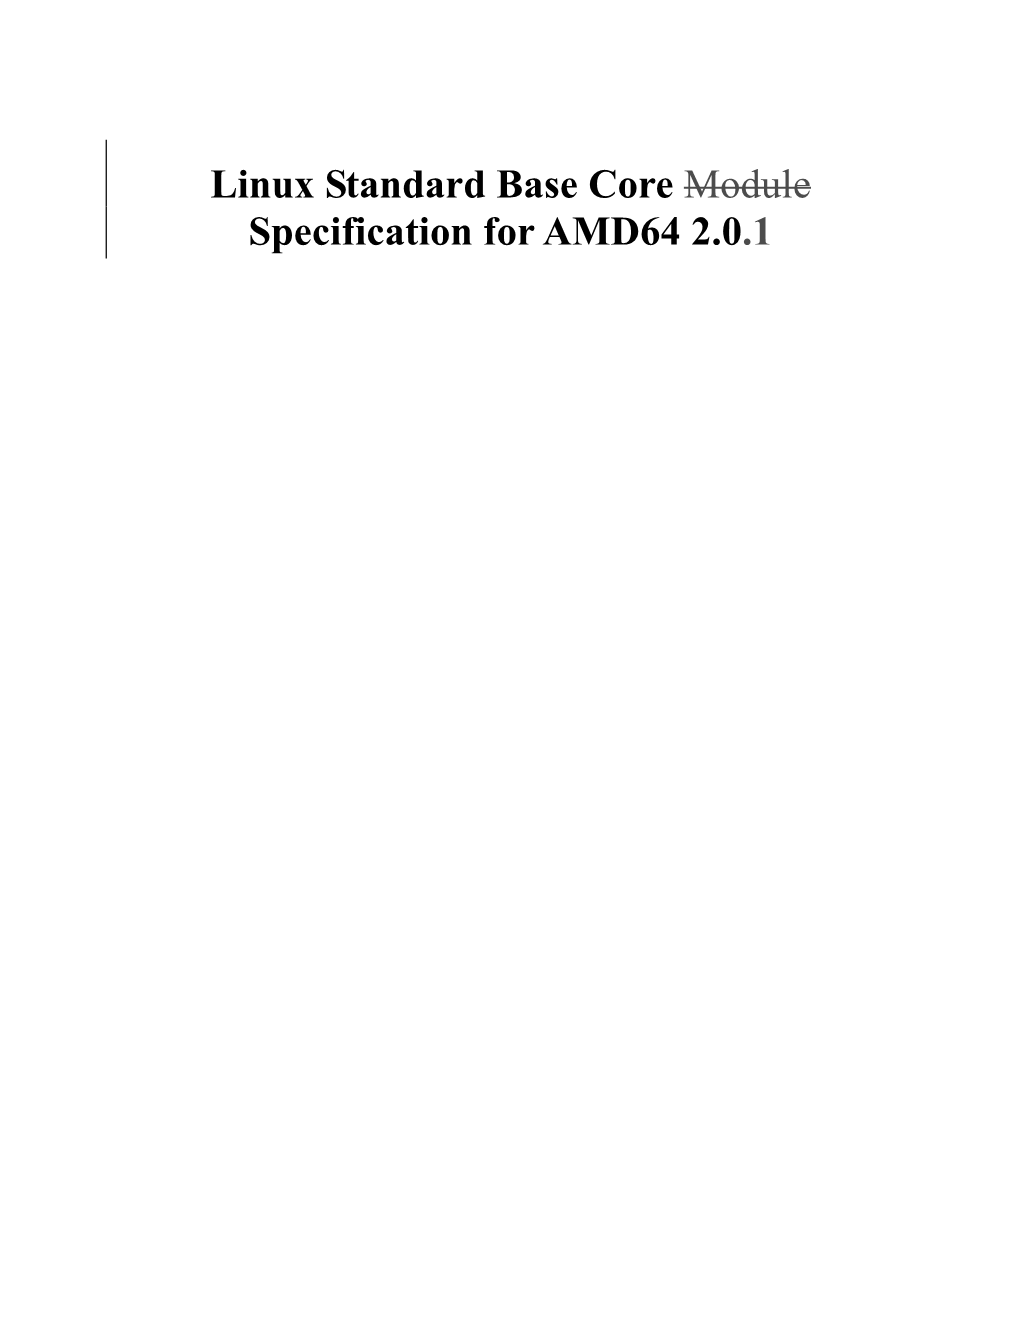 Linux Standard Base Core Module Specification for AMD64 2.0.1